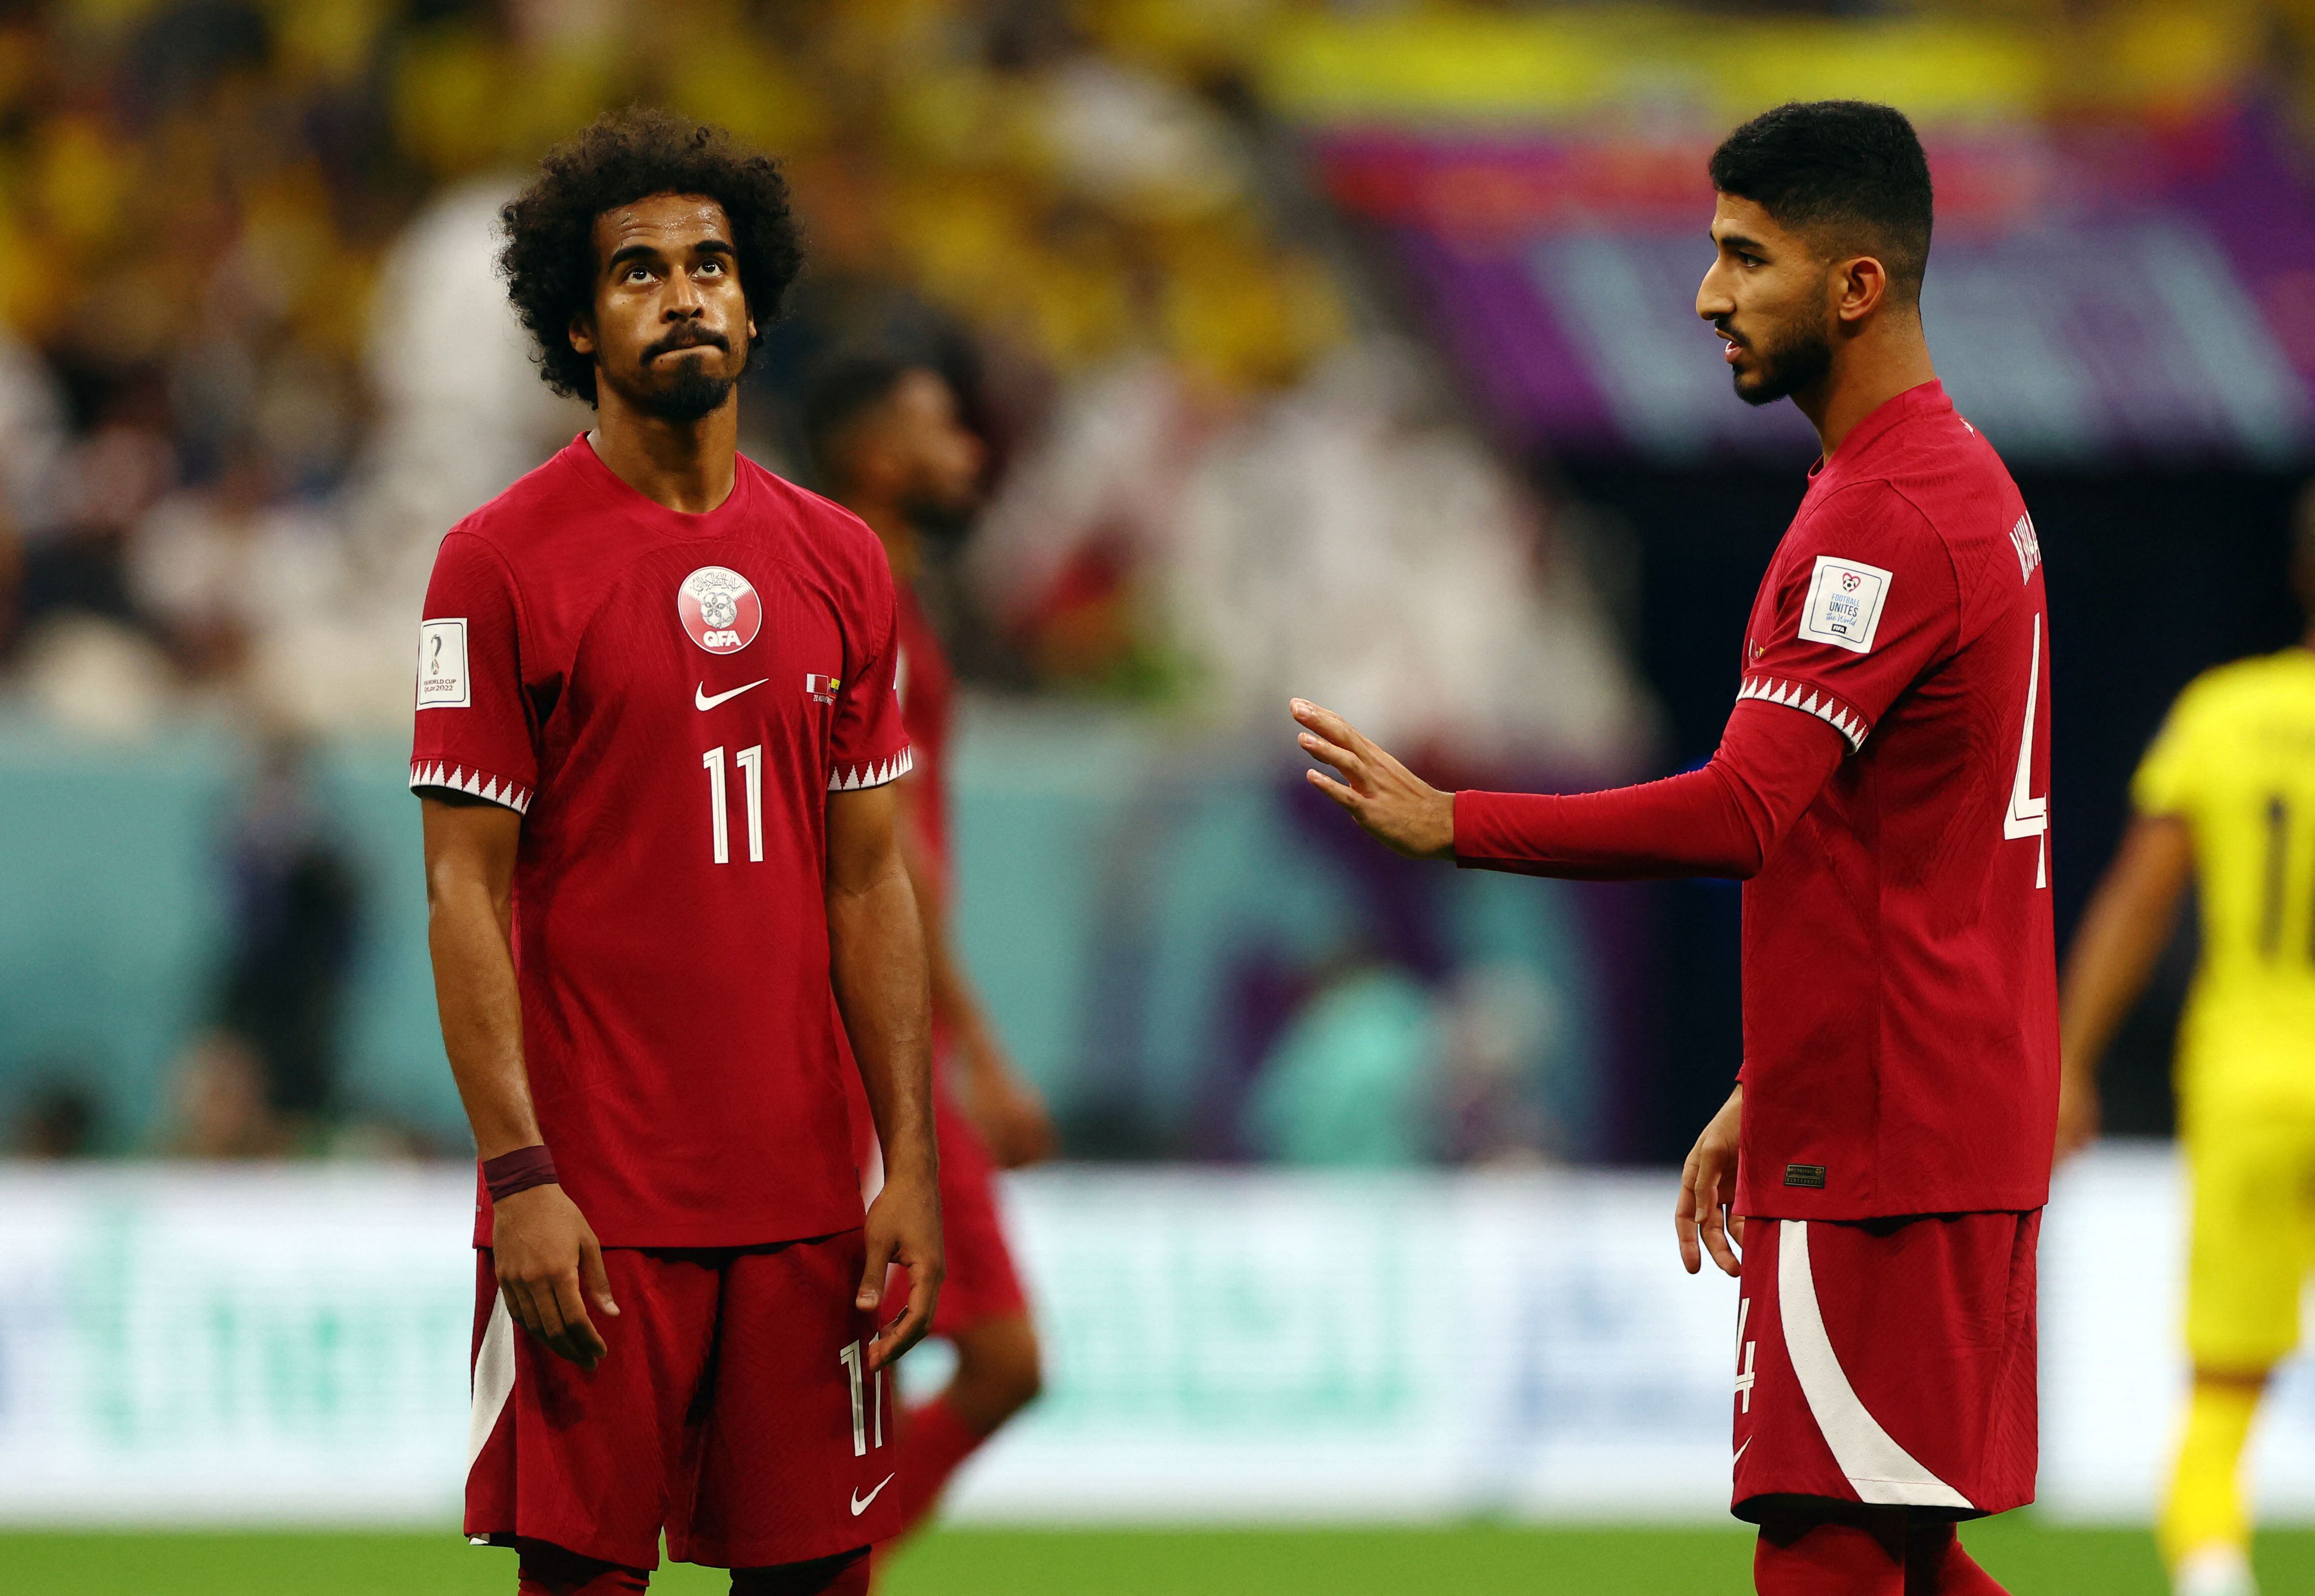 Soccer Football - FIFA World Cup Qatar 2022 - Group A - Qatar v Ecuador - Al Bayt Stadium, Al Khor, Qatar - November 20, 2022 Qatar's Akram Afif looks dejected REUTERS/Kai Pfaffenbach